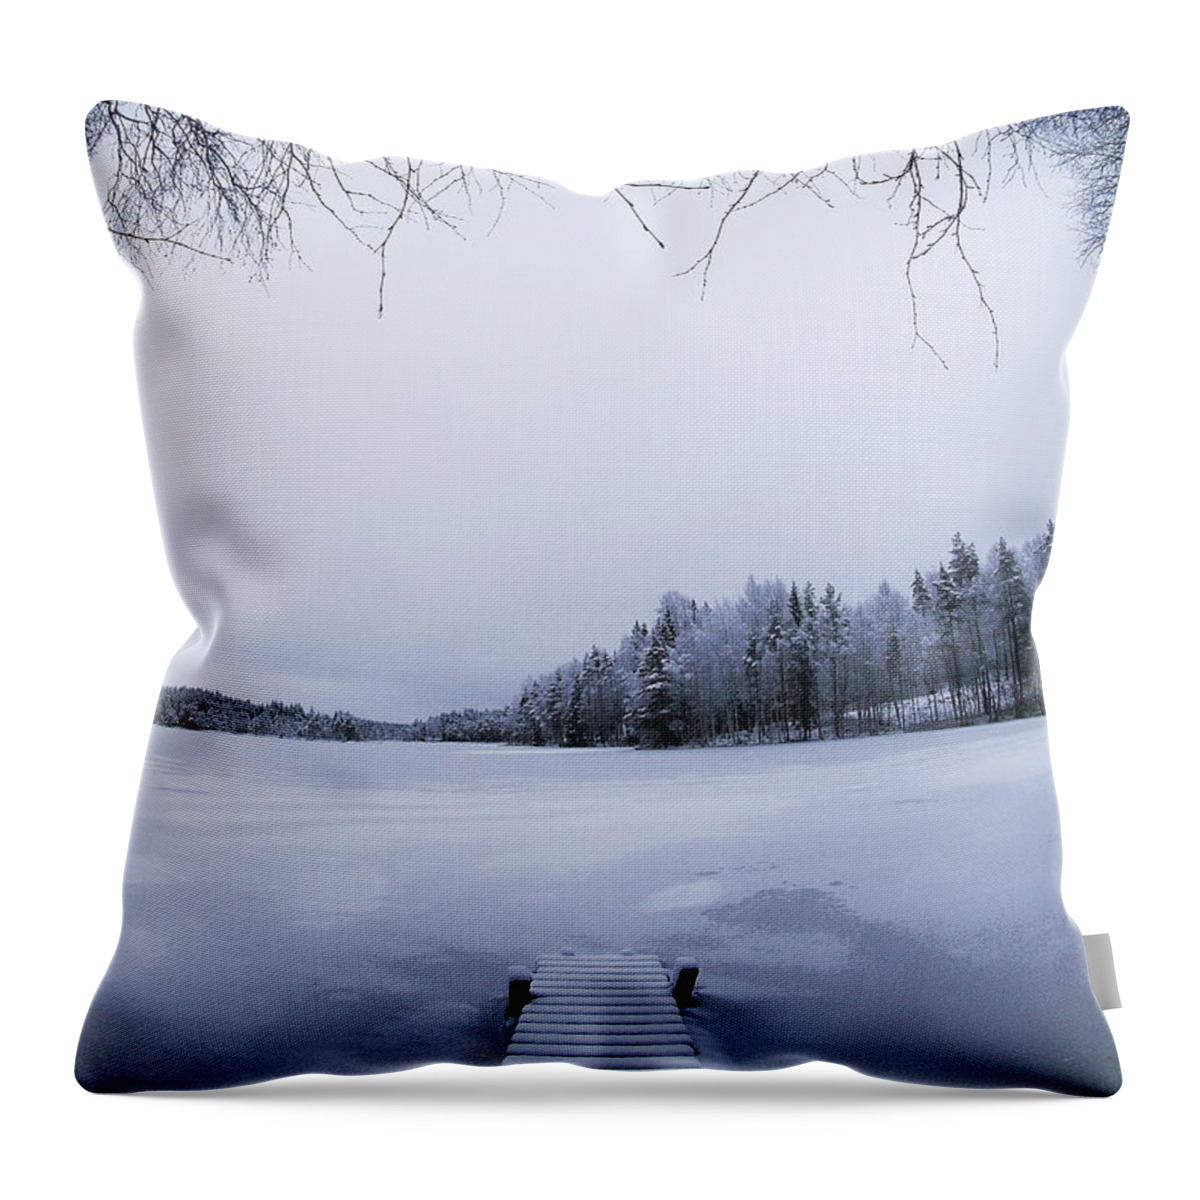 Lehtokukka Throw Pillow featuring the photograph Koverolampi #3 by Jouko Lehto